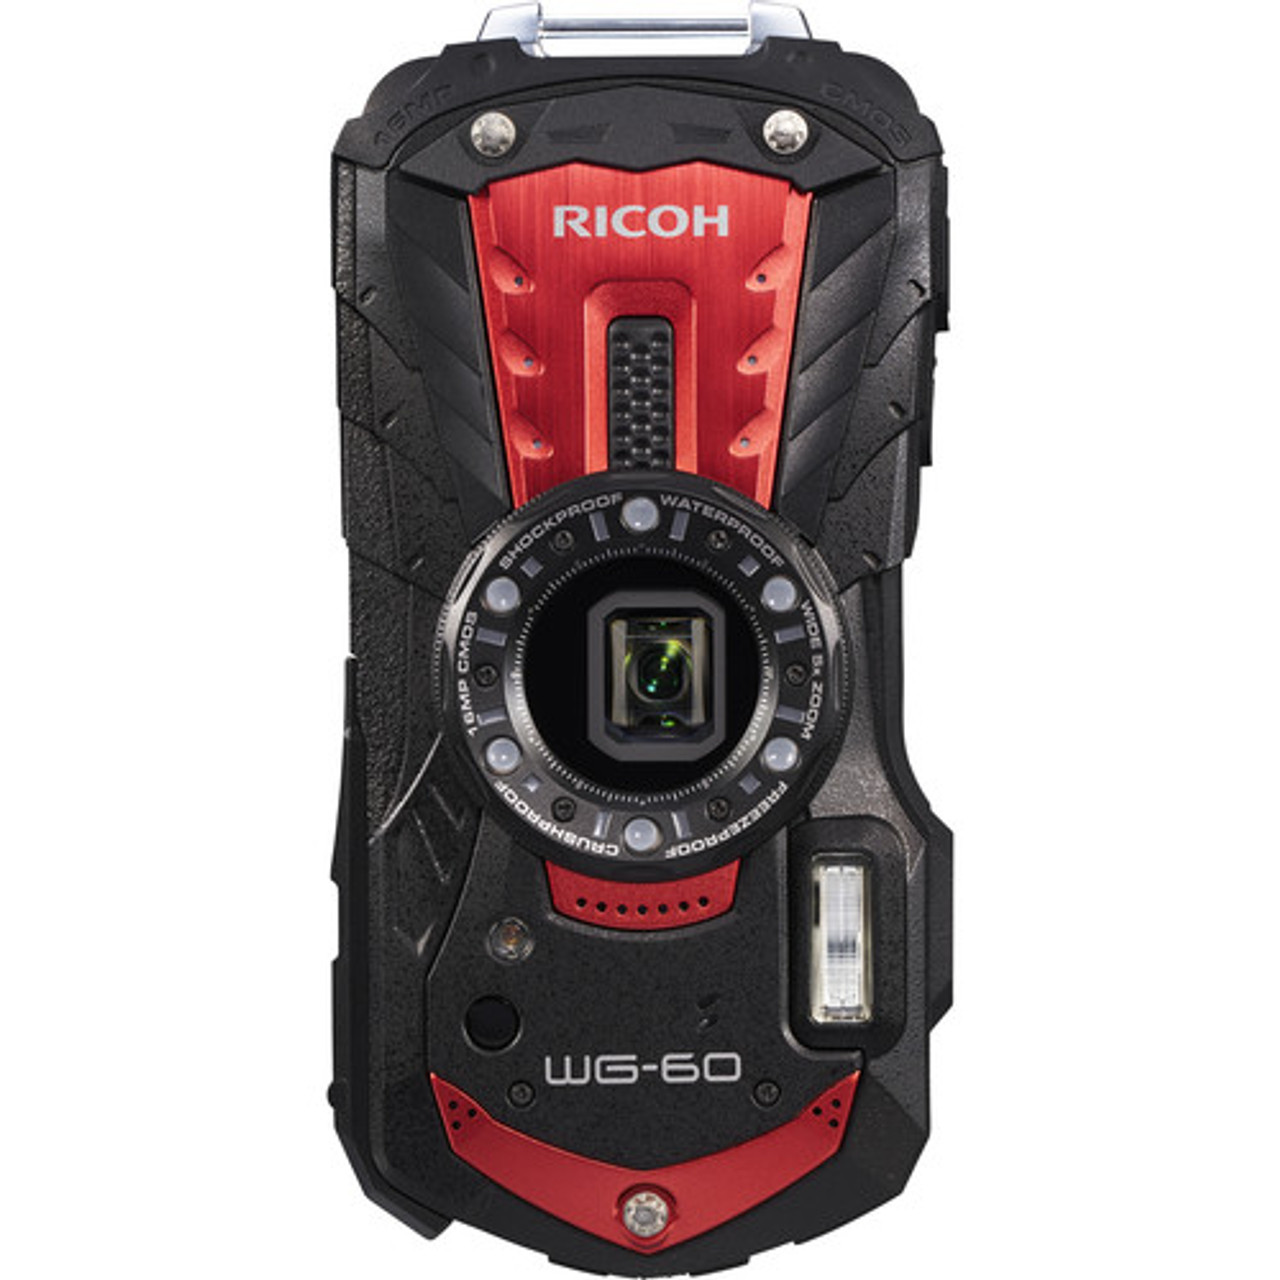 Ricoh WG-60 Digital Camera (Red) at Acephoto.net